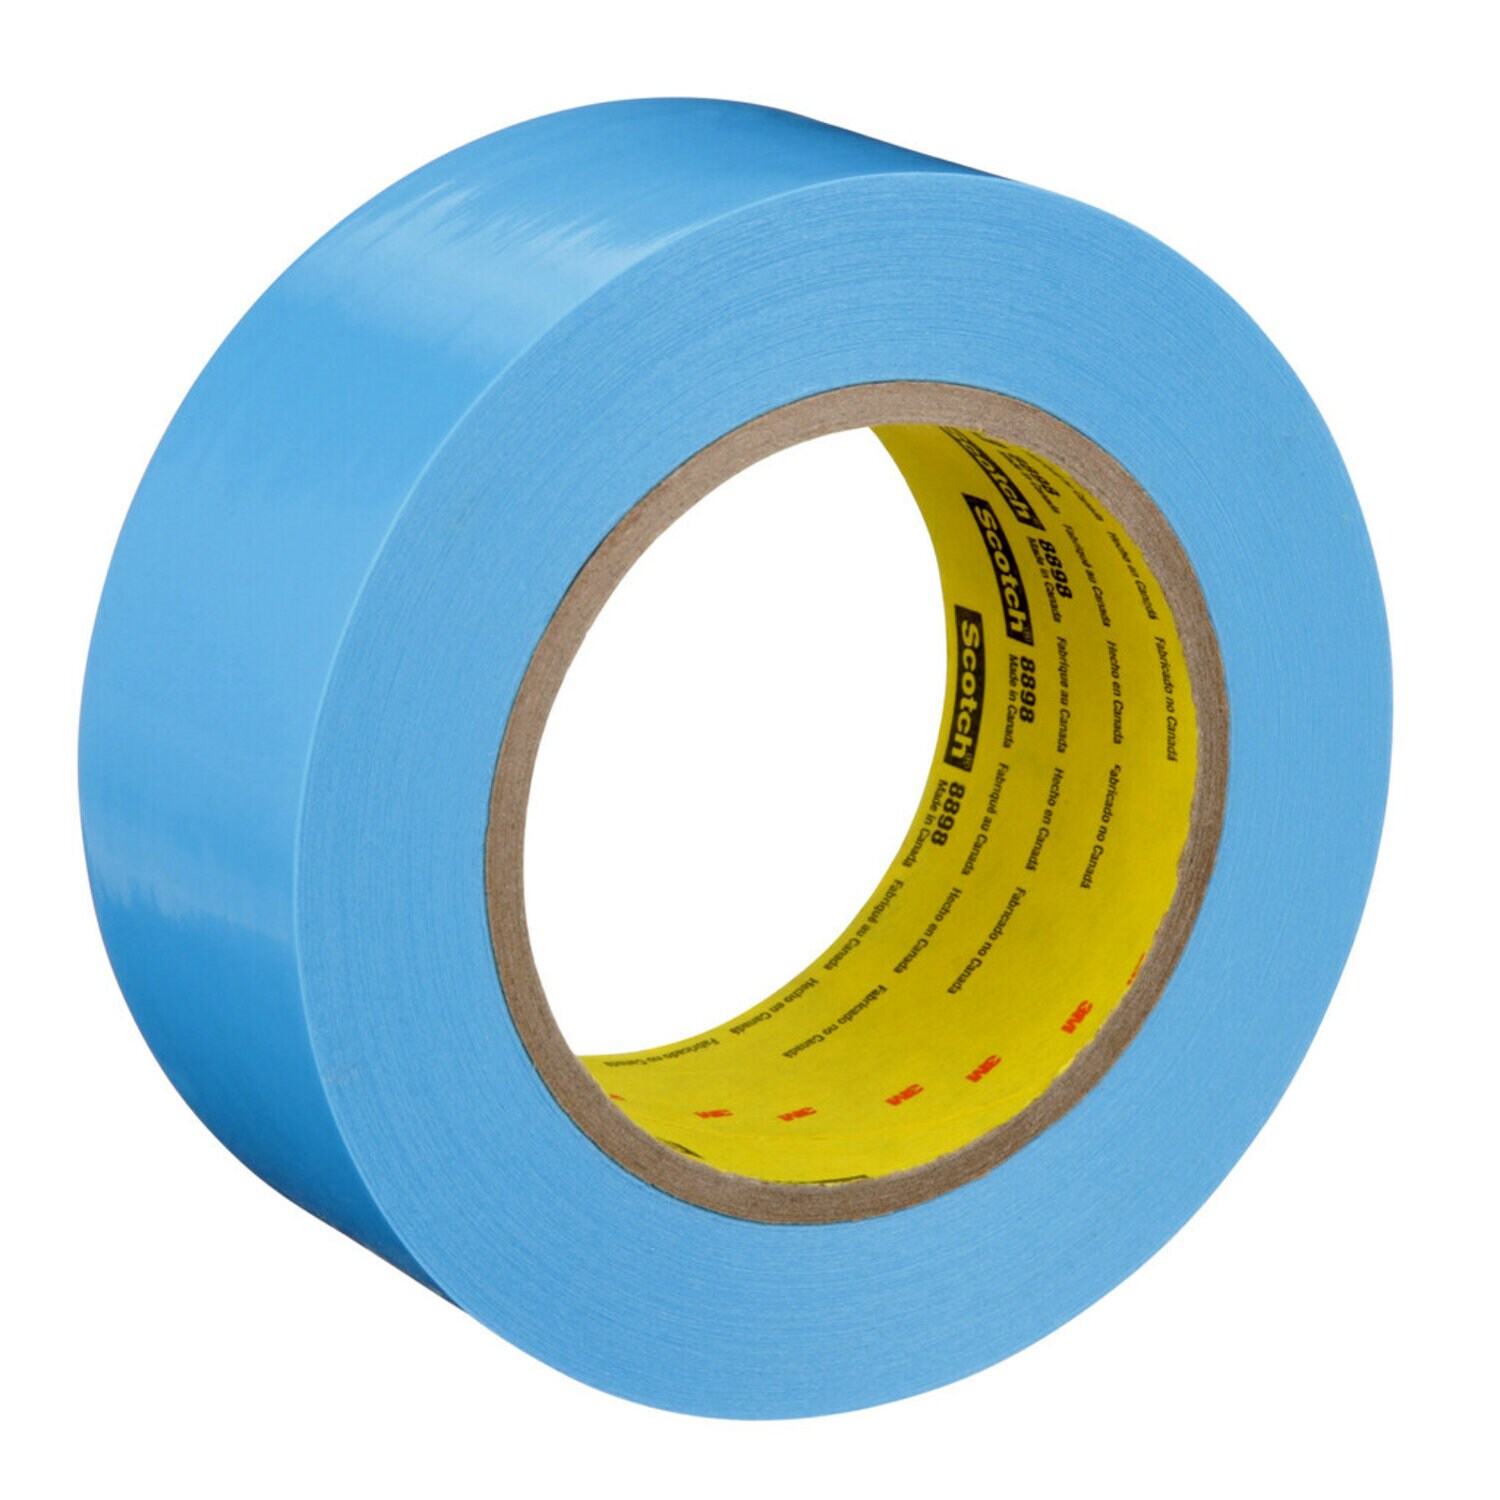 7000028947 - Scotch Strapping Tape 8898, Blue, 48 mm x 55 m, 4.6 mil, 24 rolls per
case